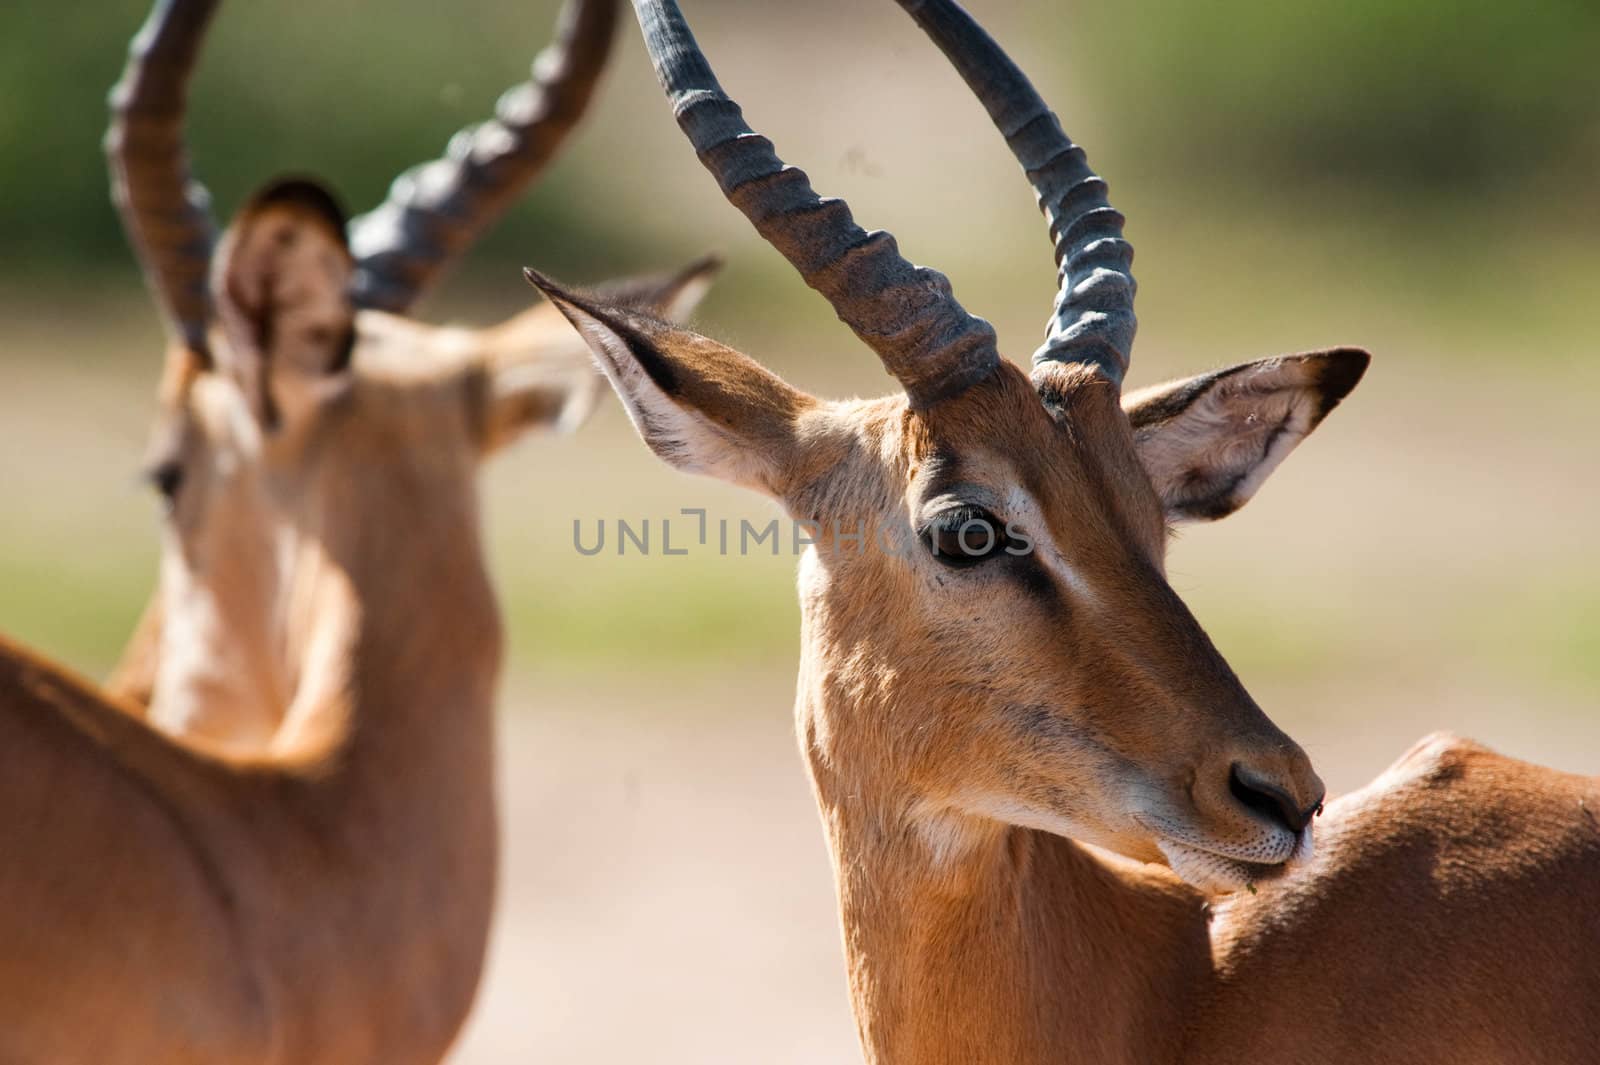 Impala by edan